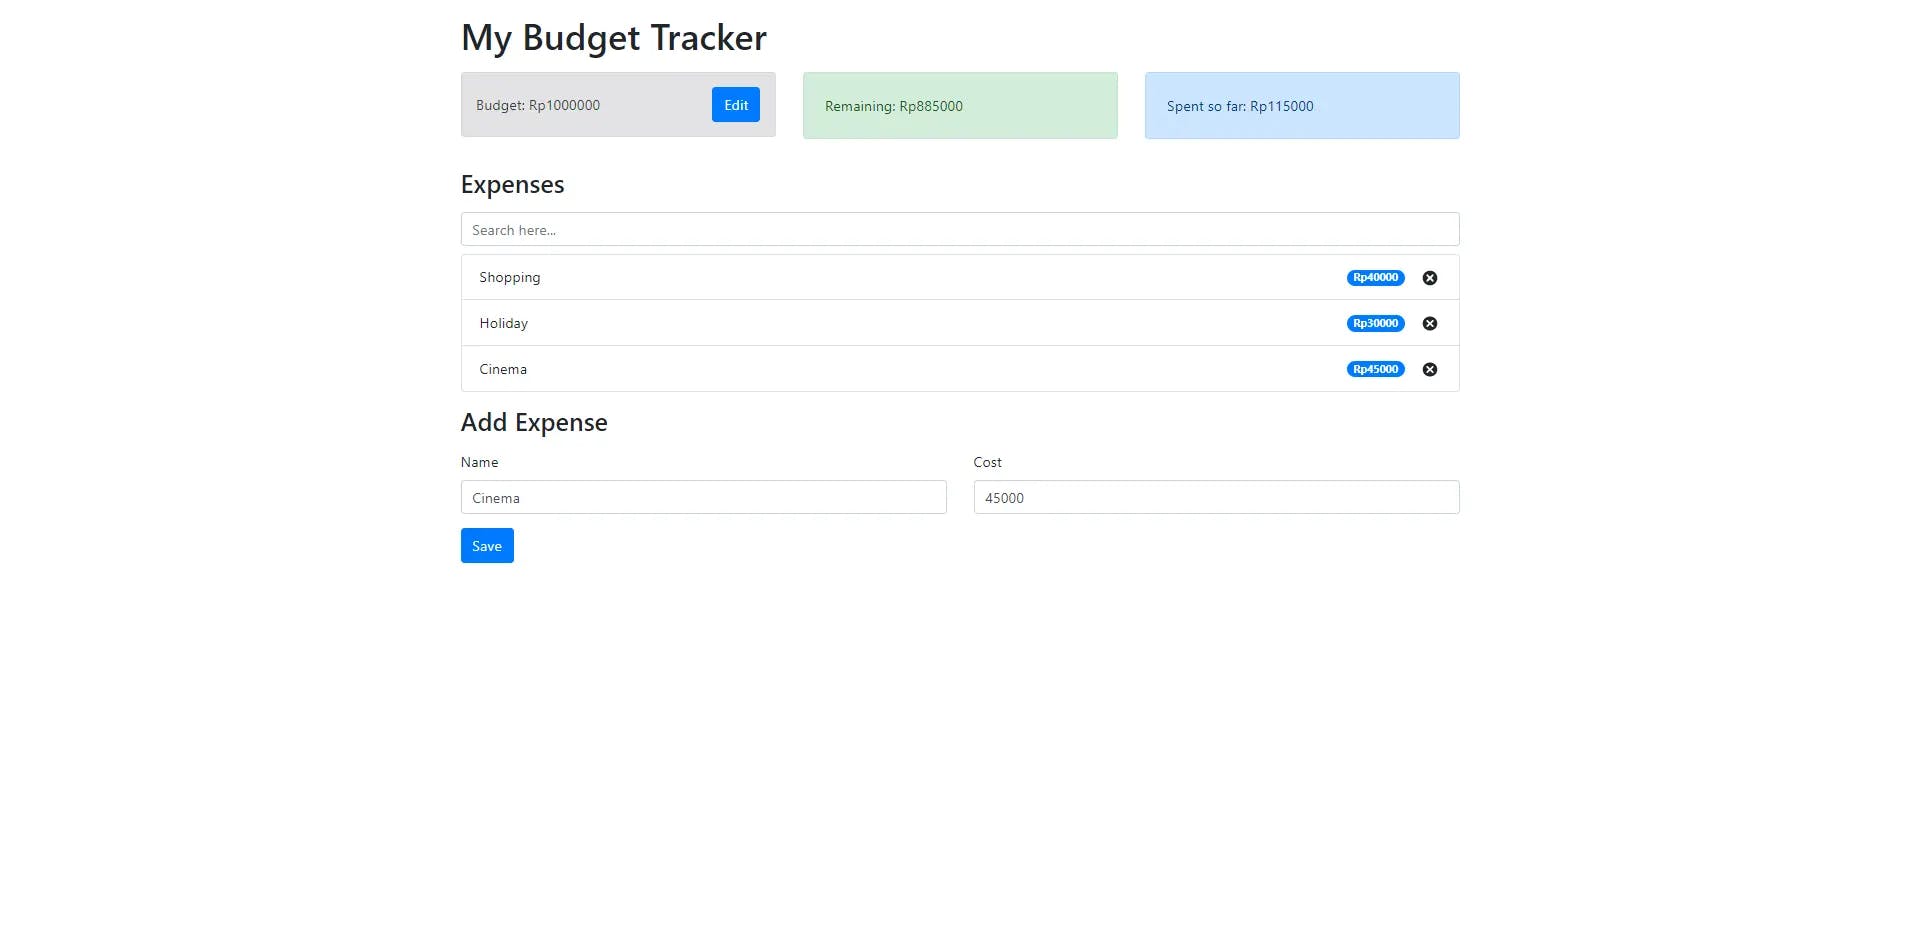 Budget Tracker App